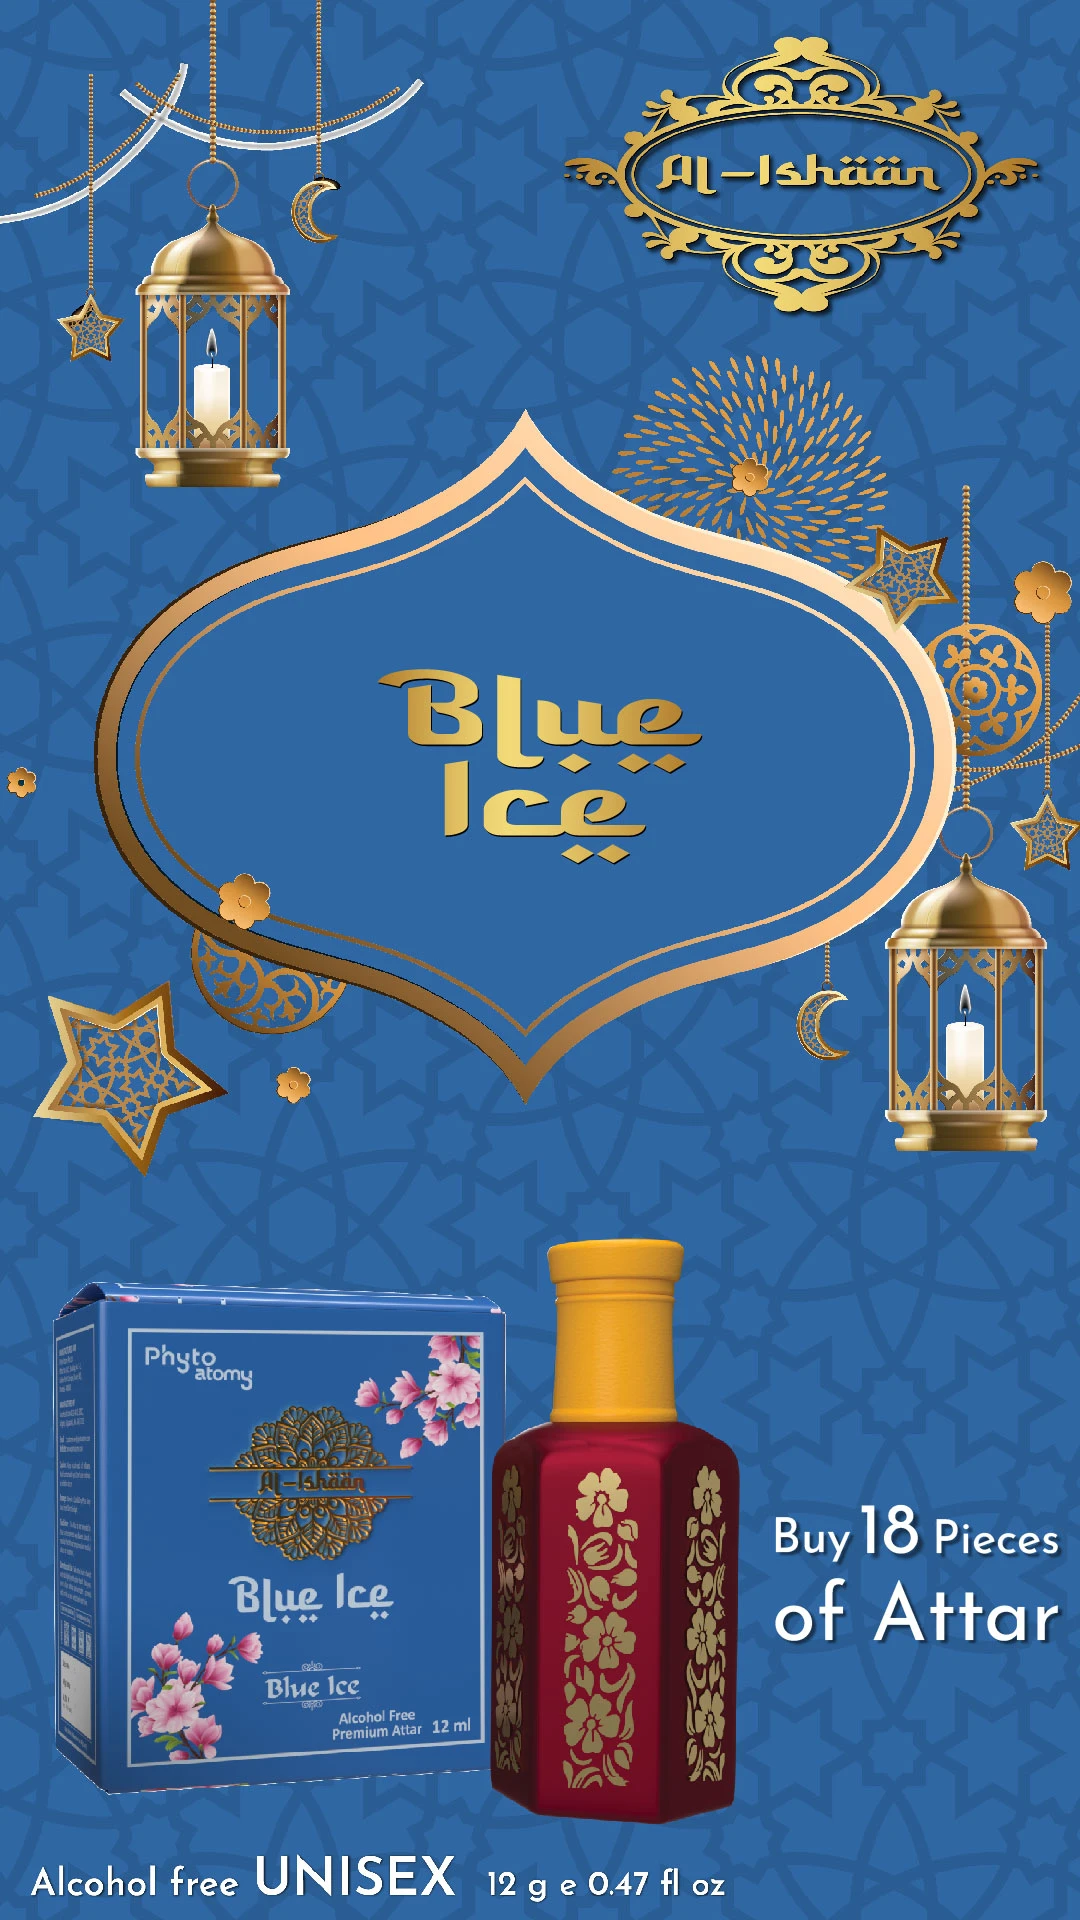 RBV B2B Al Ishan Blue Ice Attar (12ml)-18 Pcs.